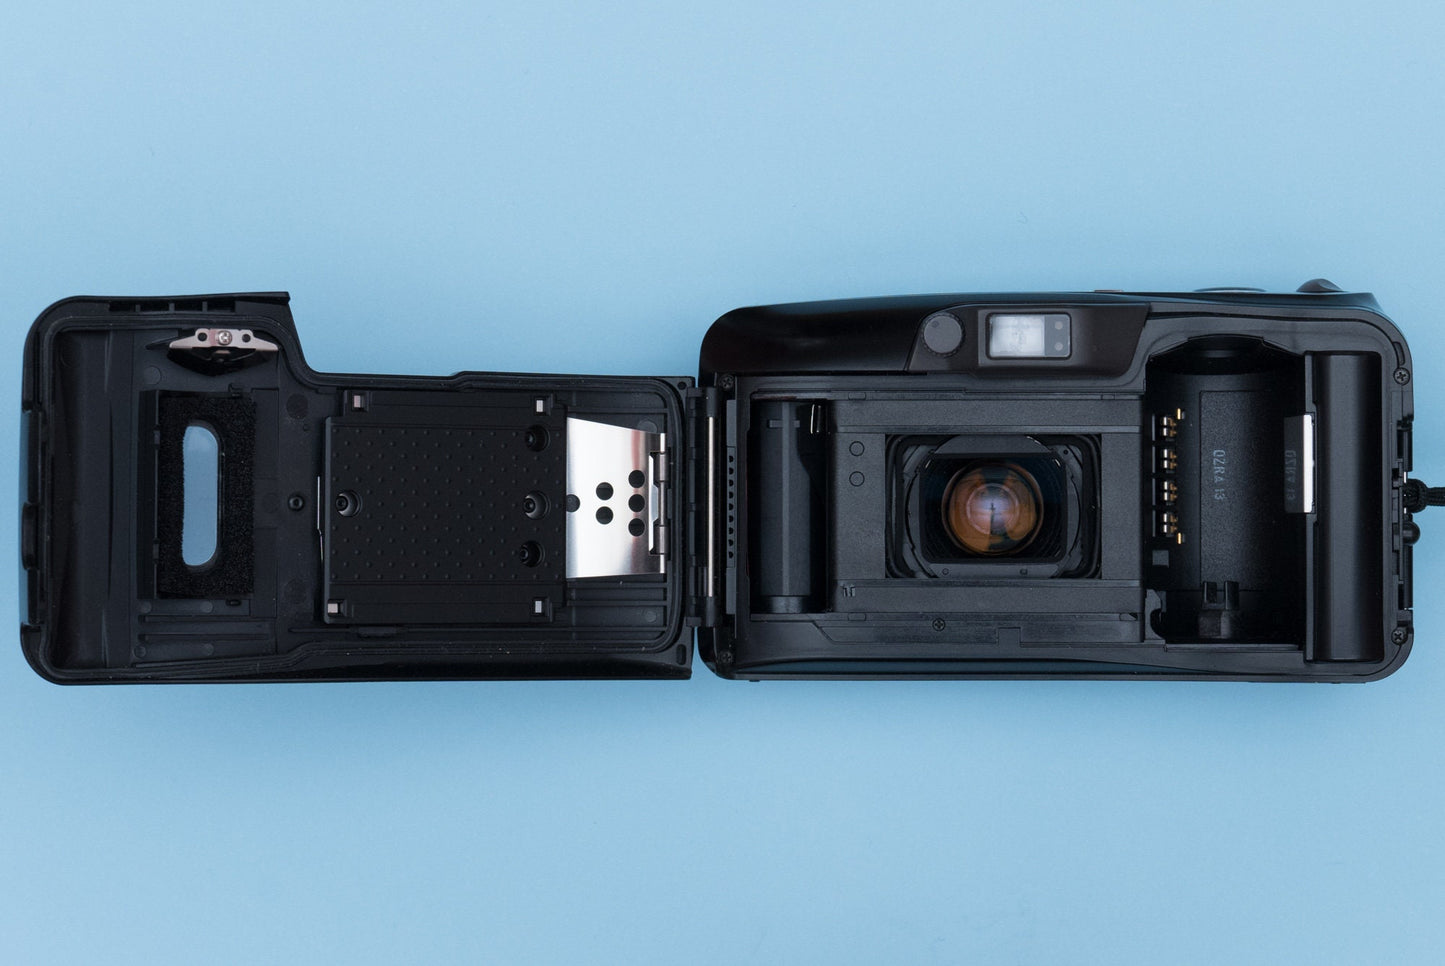 Olympus µ[mju:] Mju Stylus Zoom 140 Black Compact 35mm Point and Shoot Film Camera